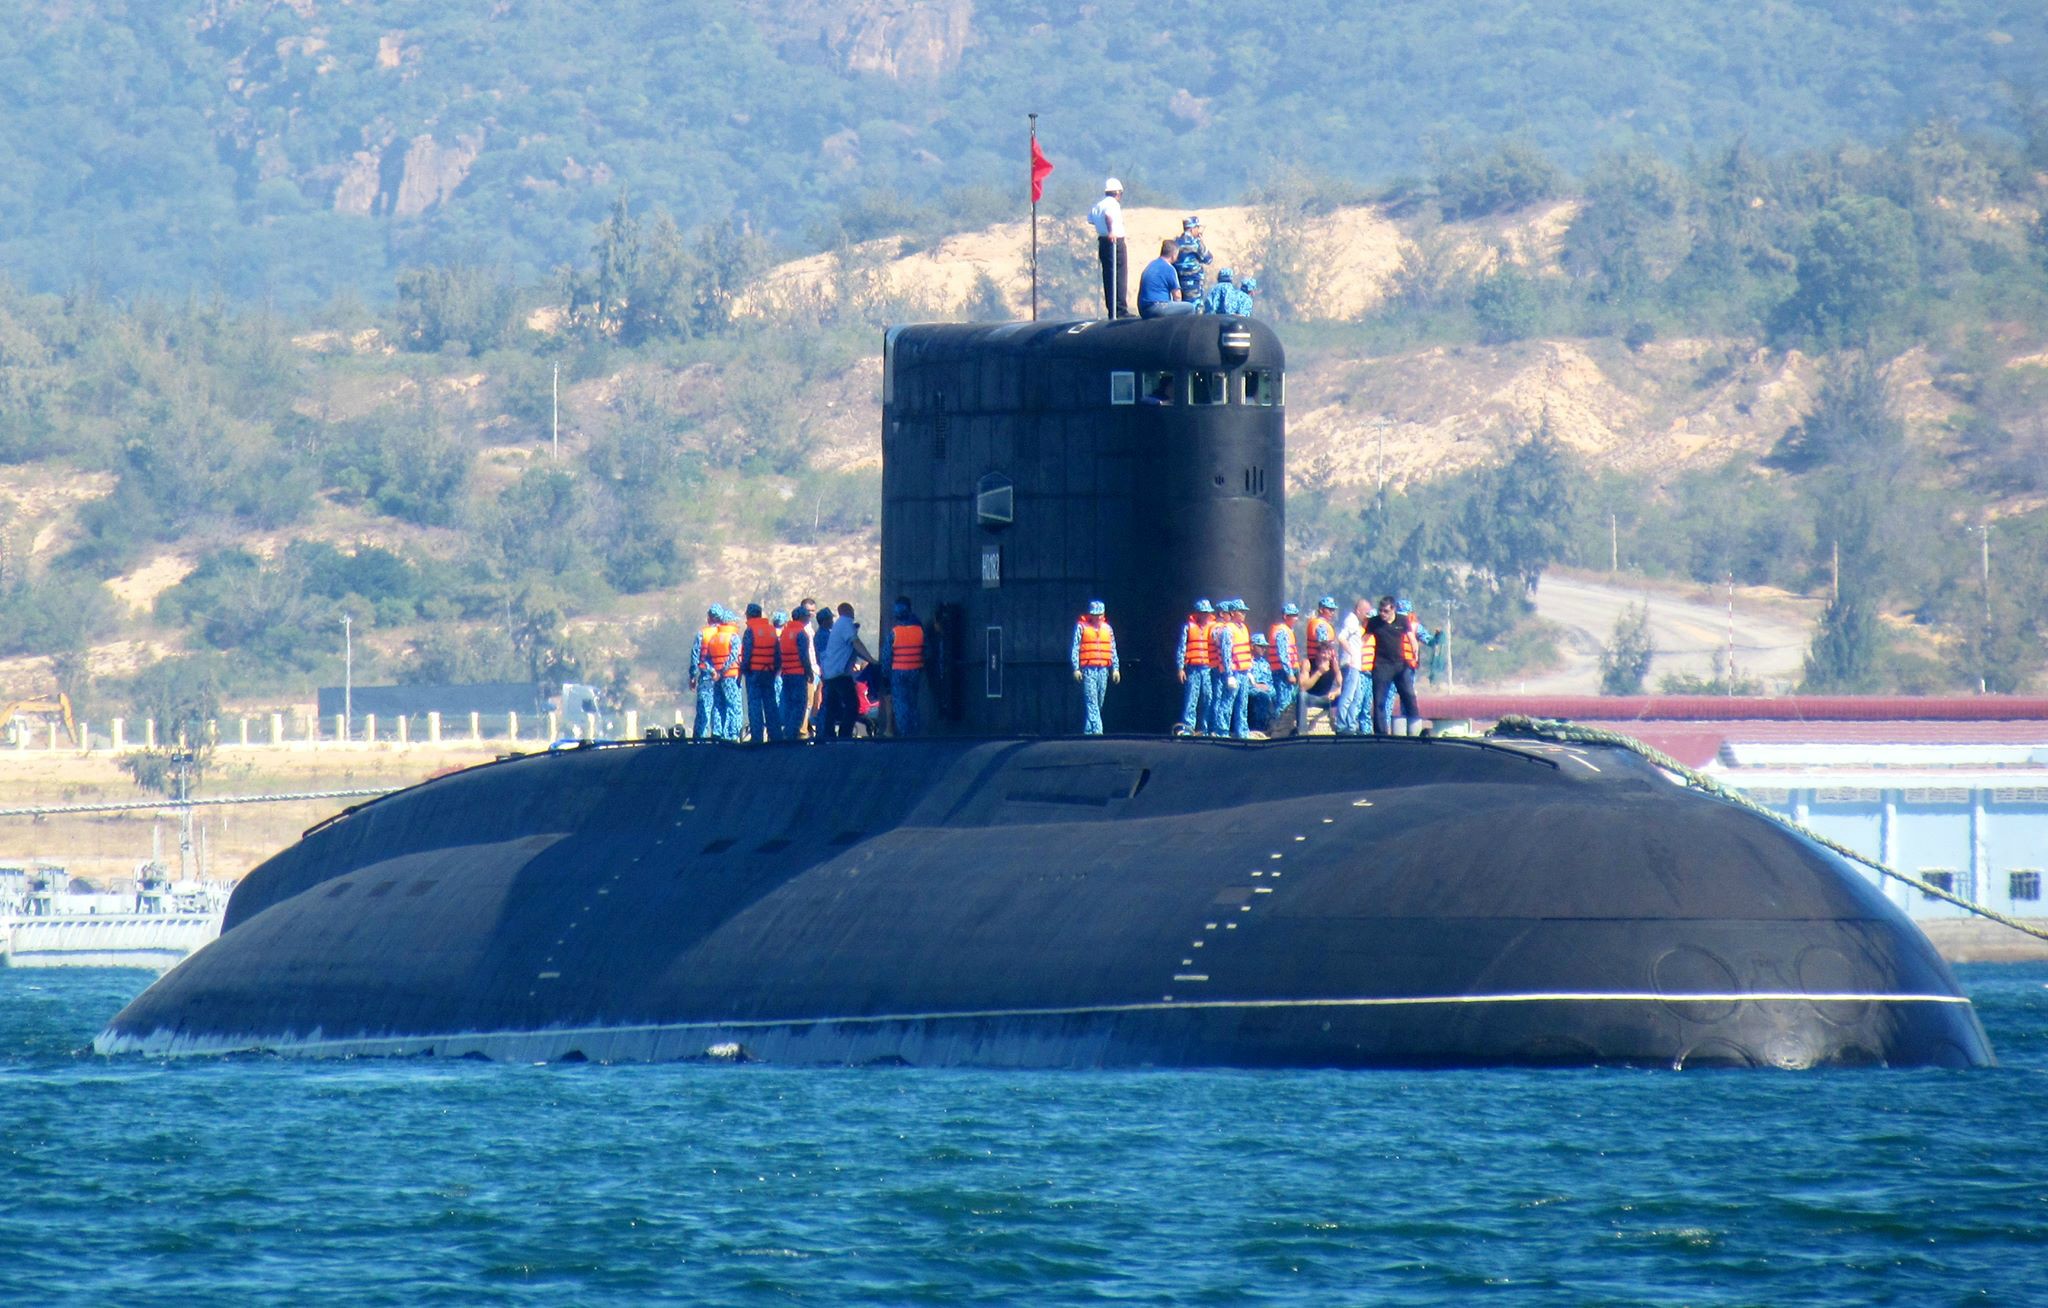 Undated photo of lead Vietnamese Navy Kilo attack submarine HQ-182 Hanoi. via Open Source IMINT